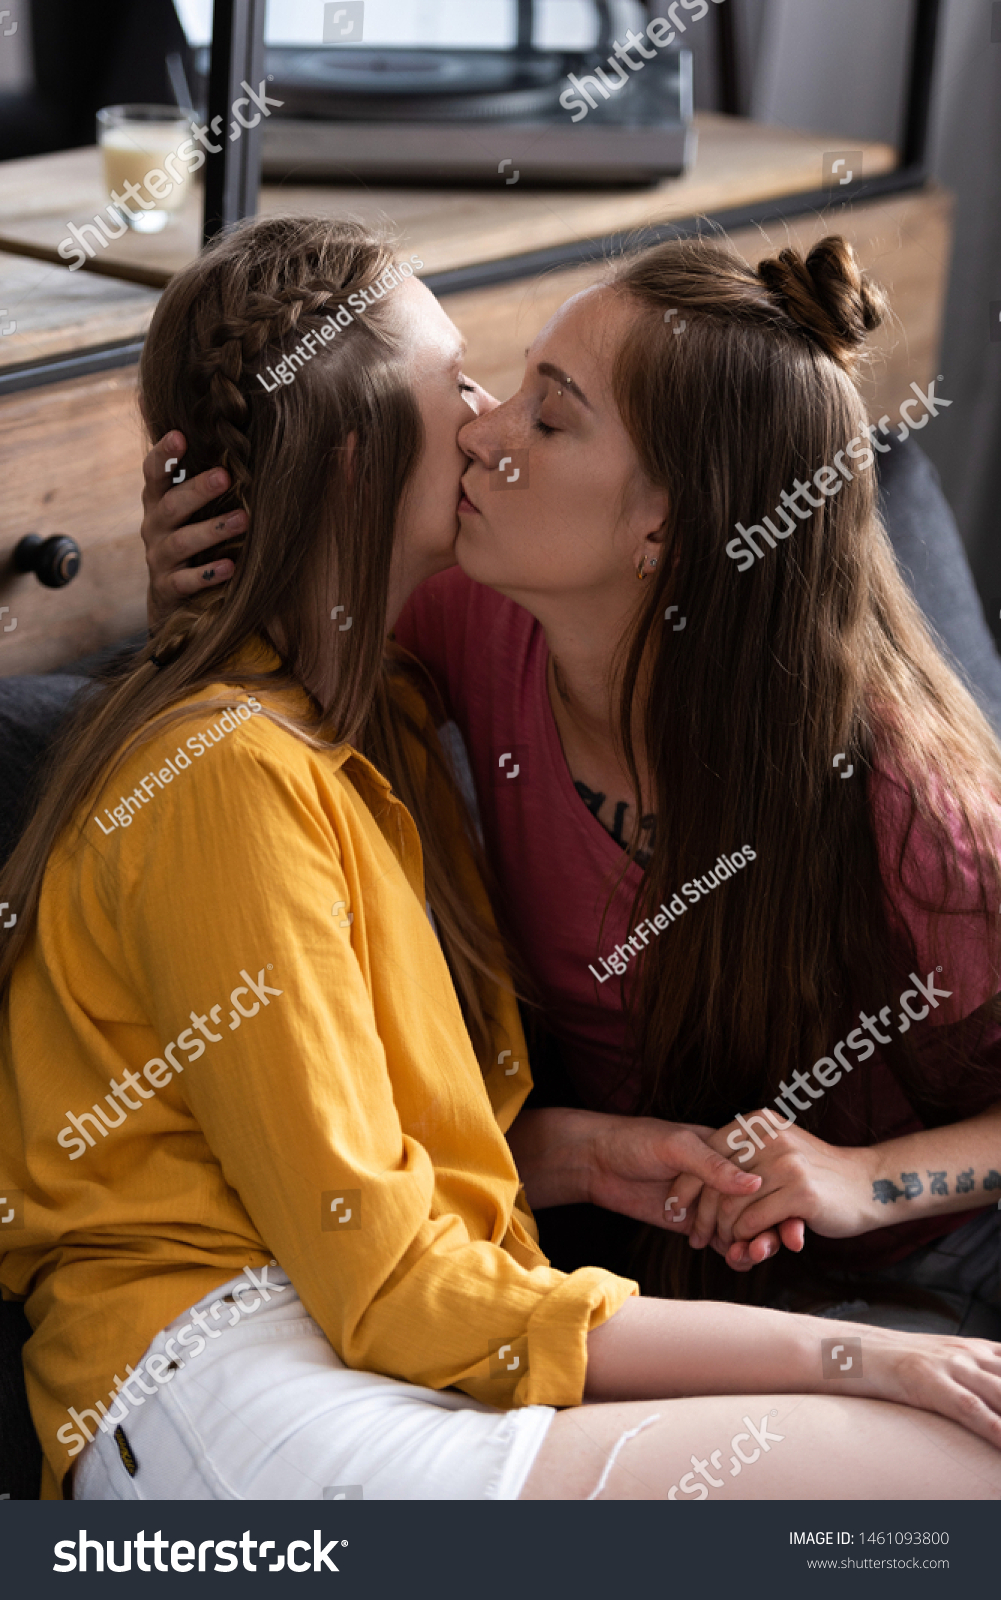 Lesbians Pictures Galleries